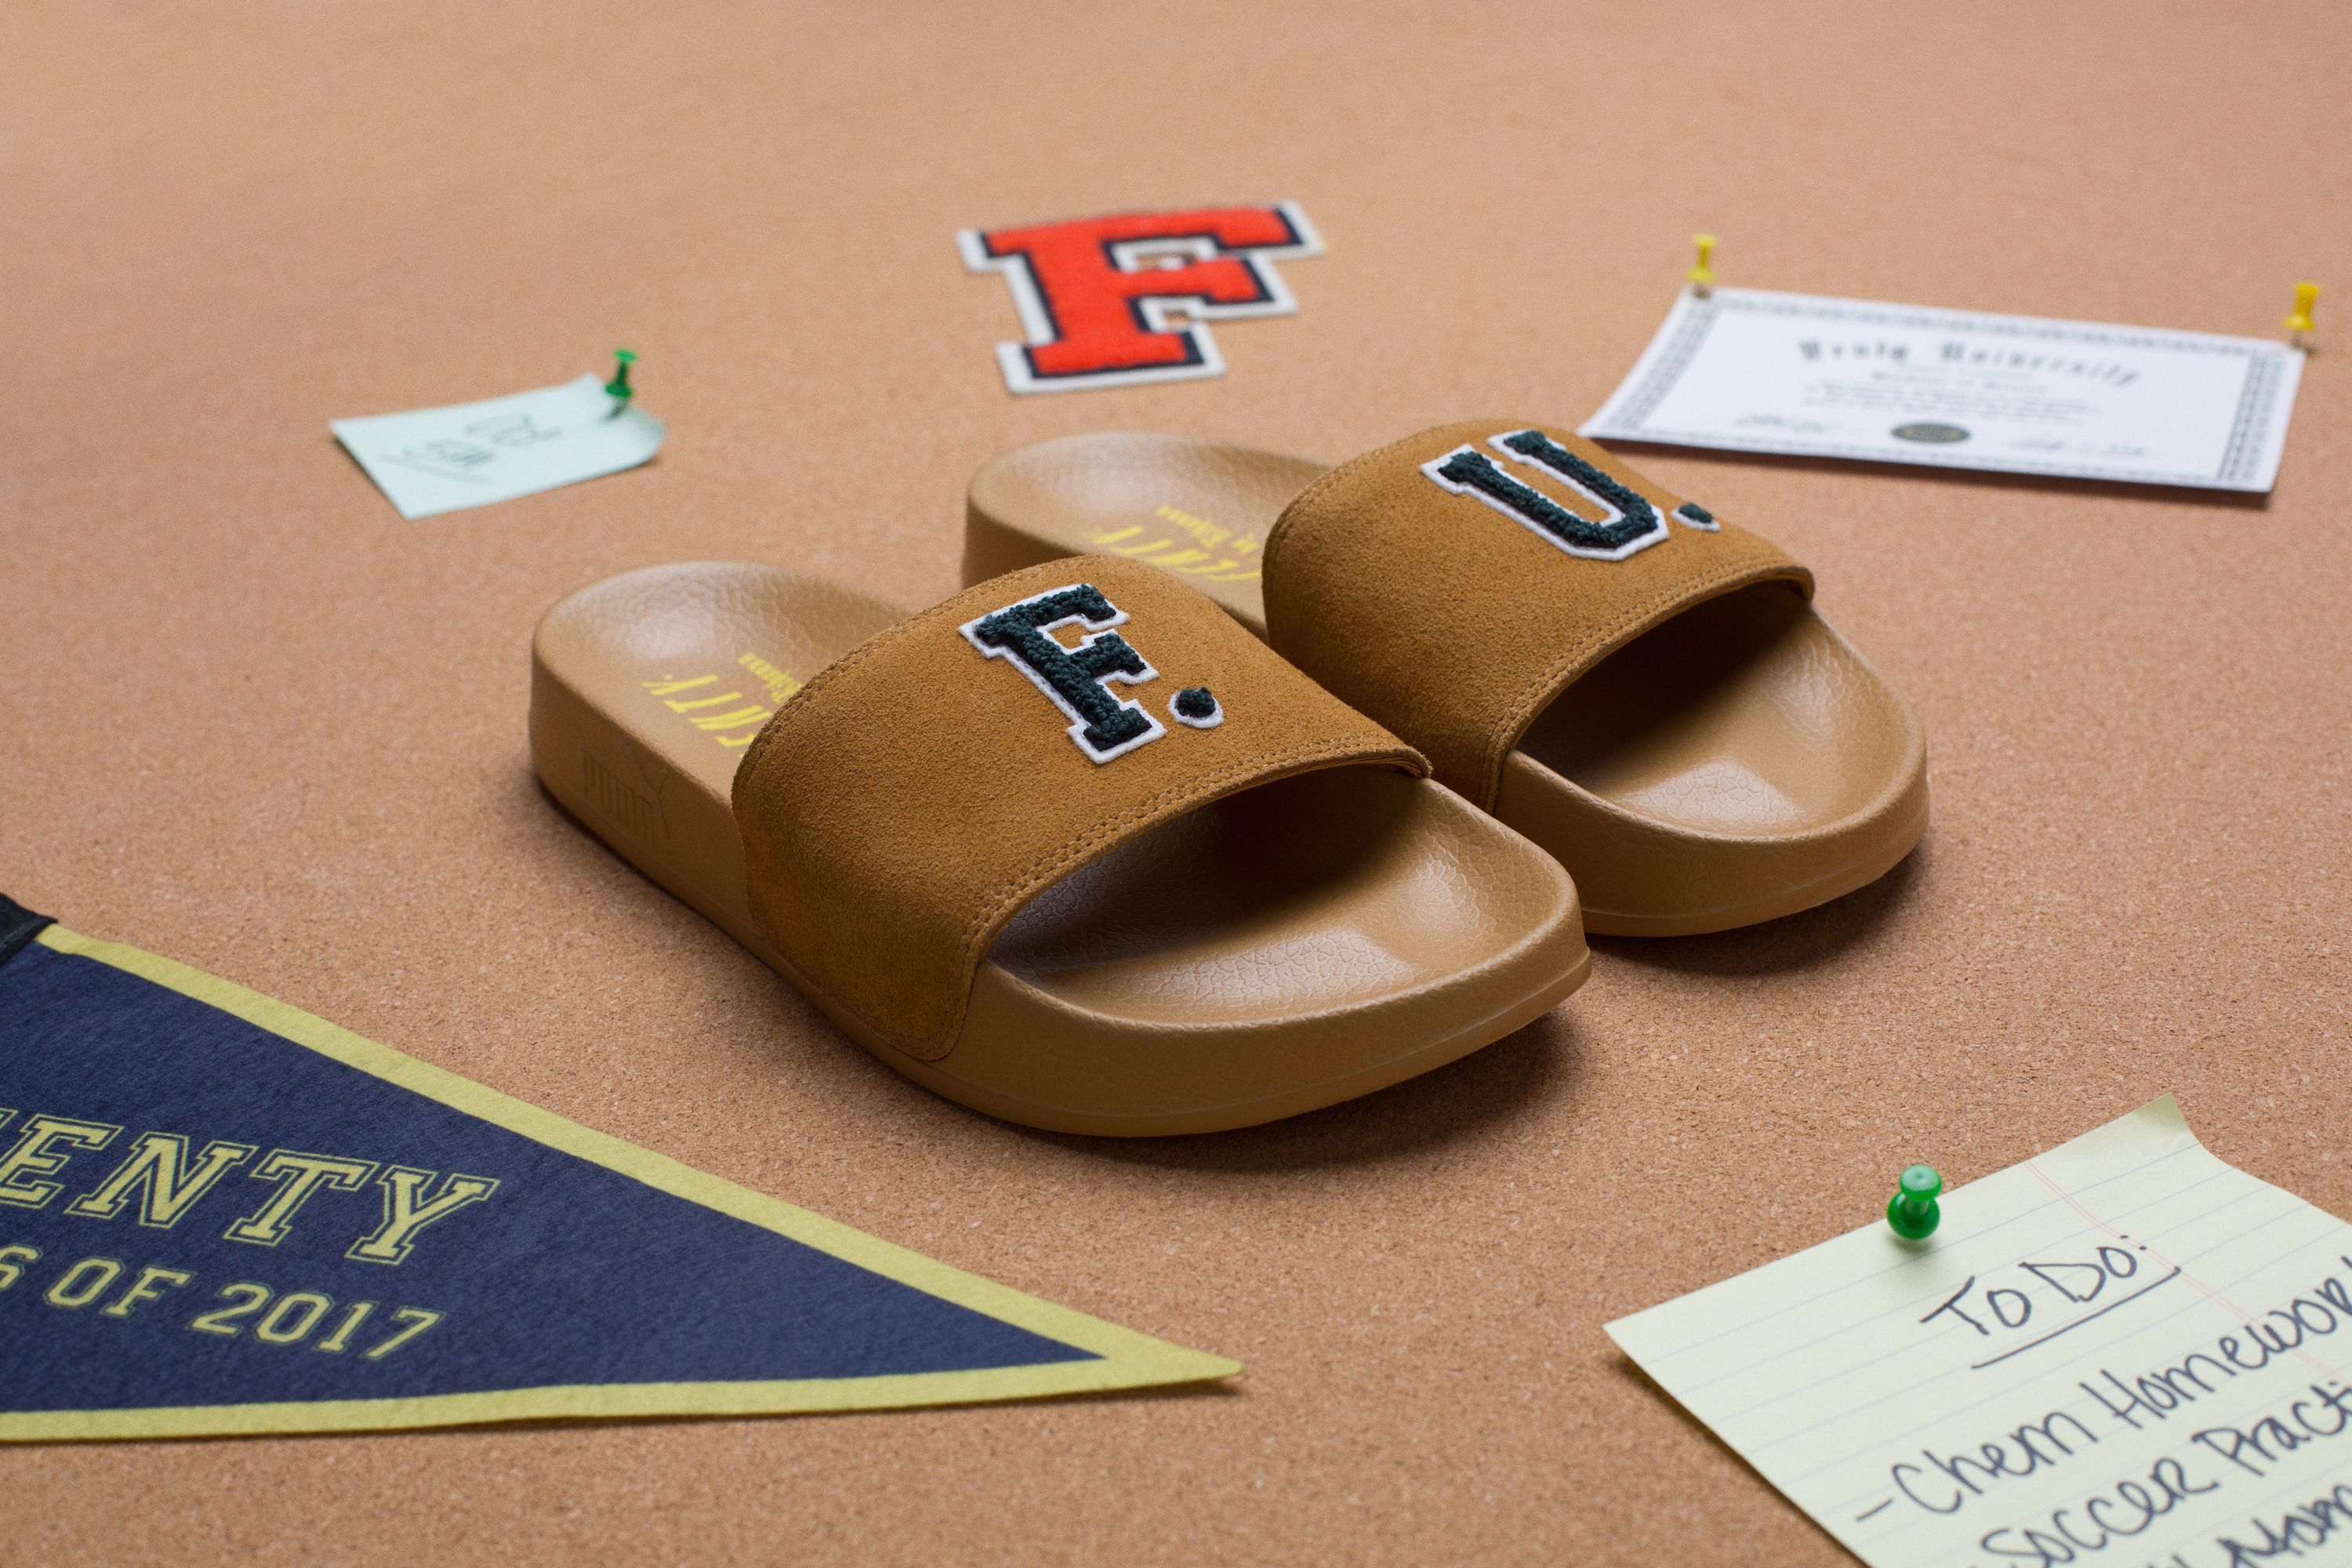 Fenty x Puma Slides - The New Sandals 